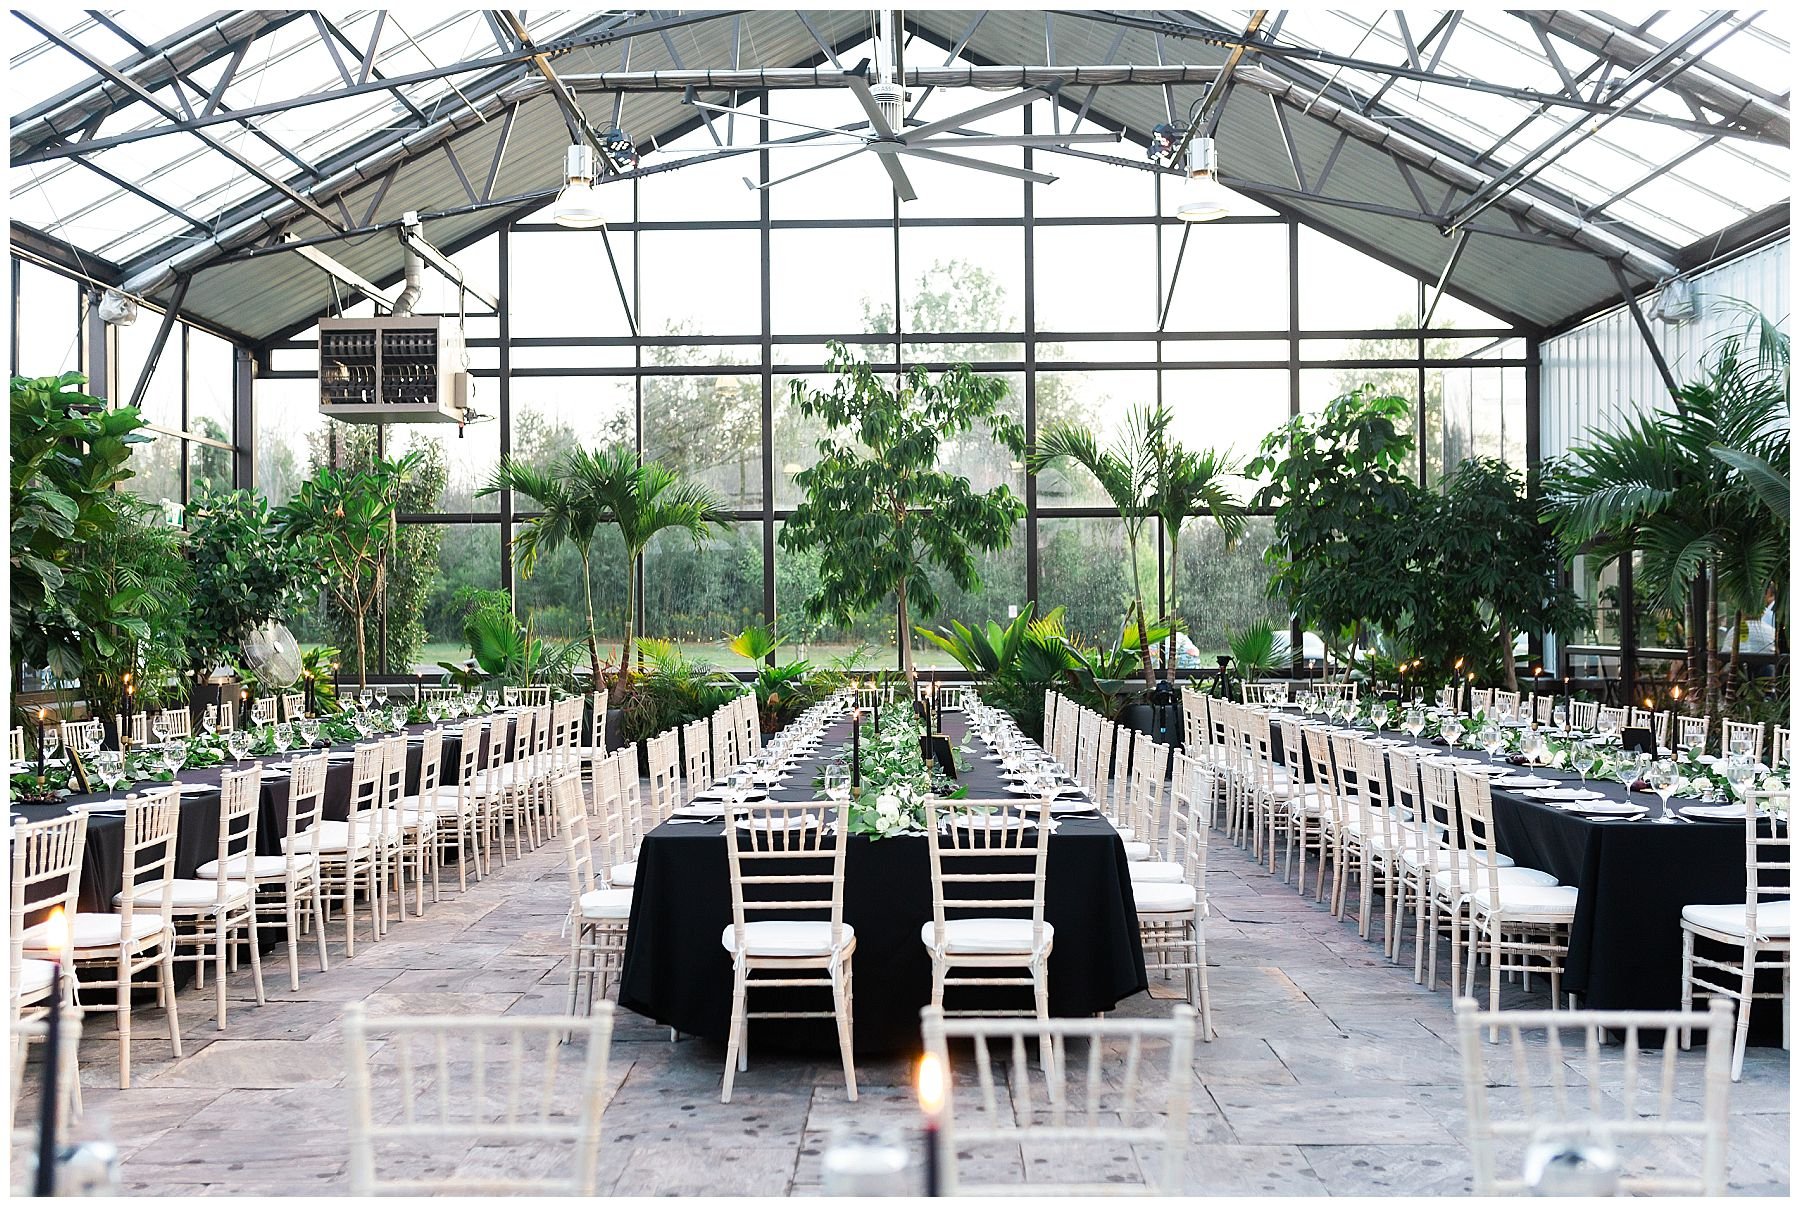  Aquatopia conservatory wedding reception space